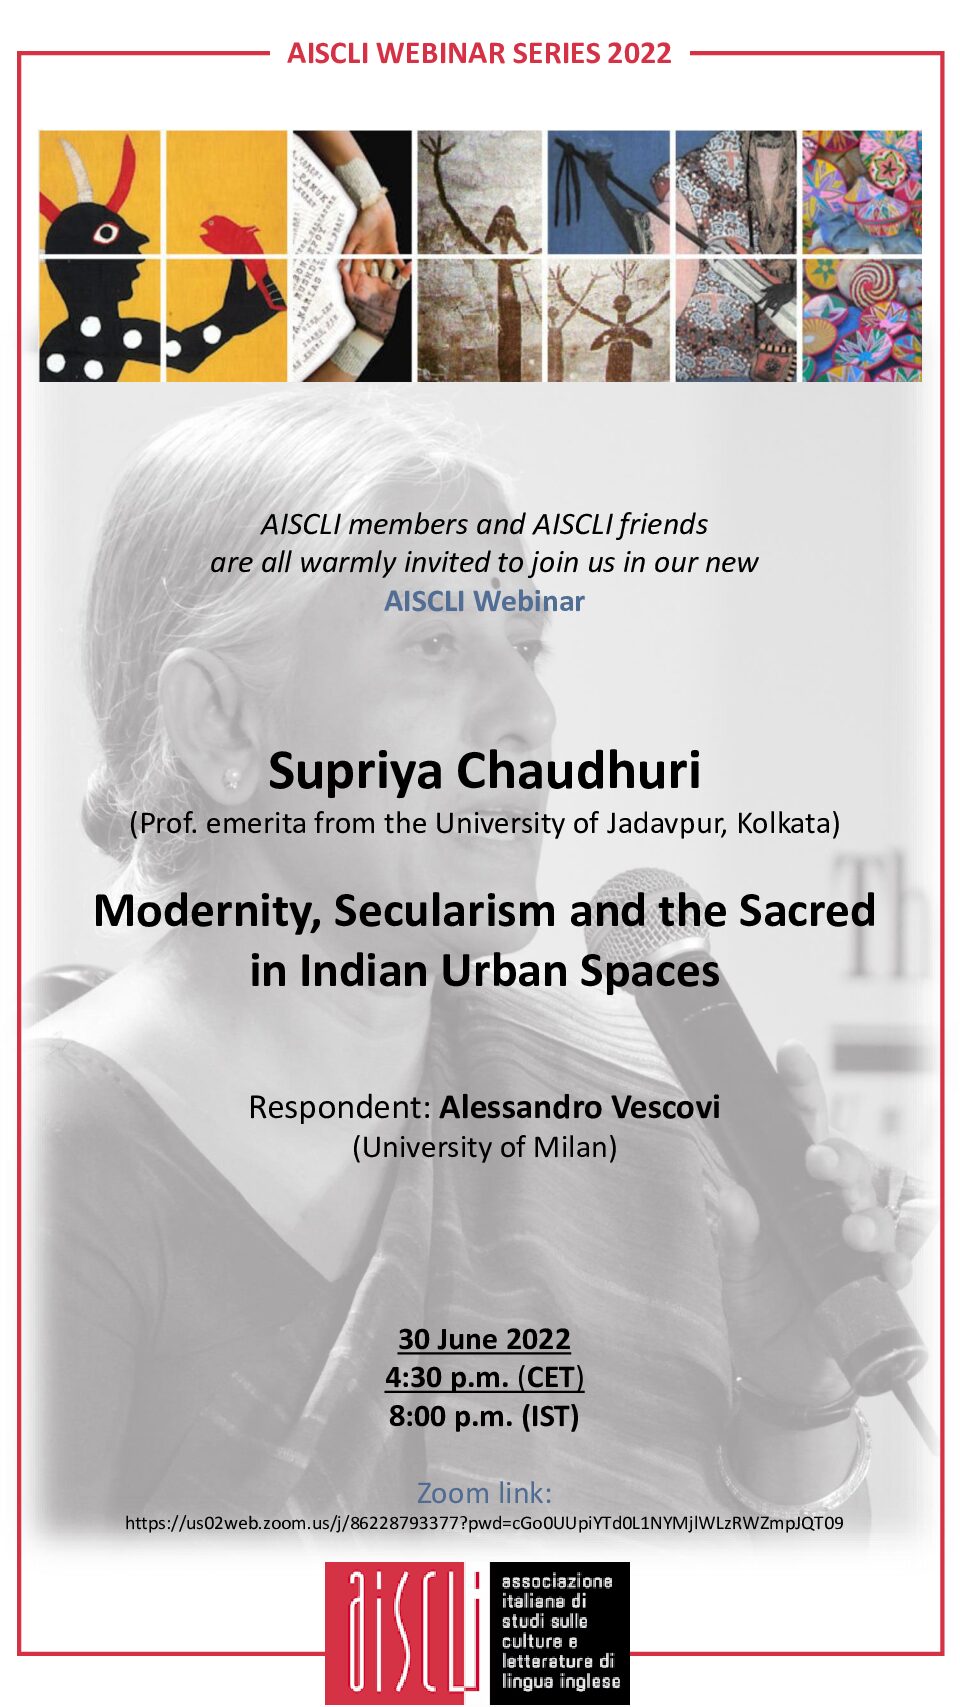 AISCLI WEBINAR SERIES 2022: Supriya Chaudhuri